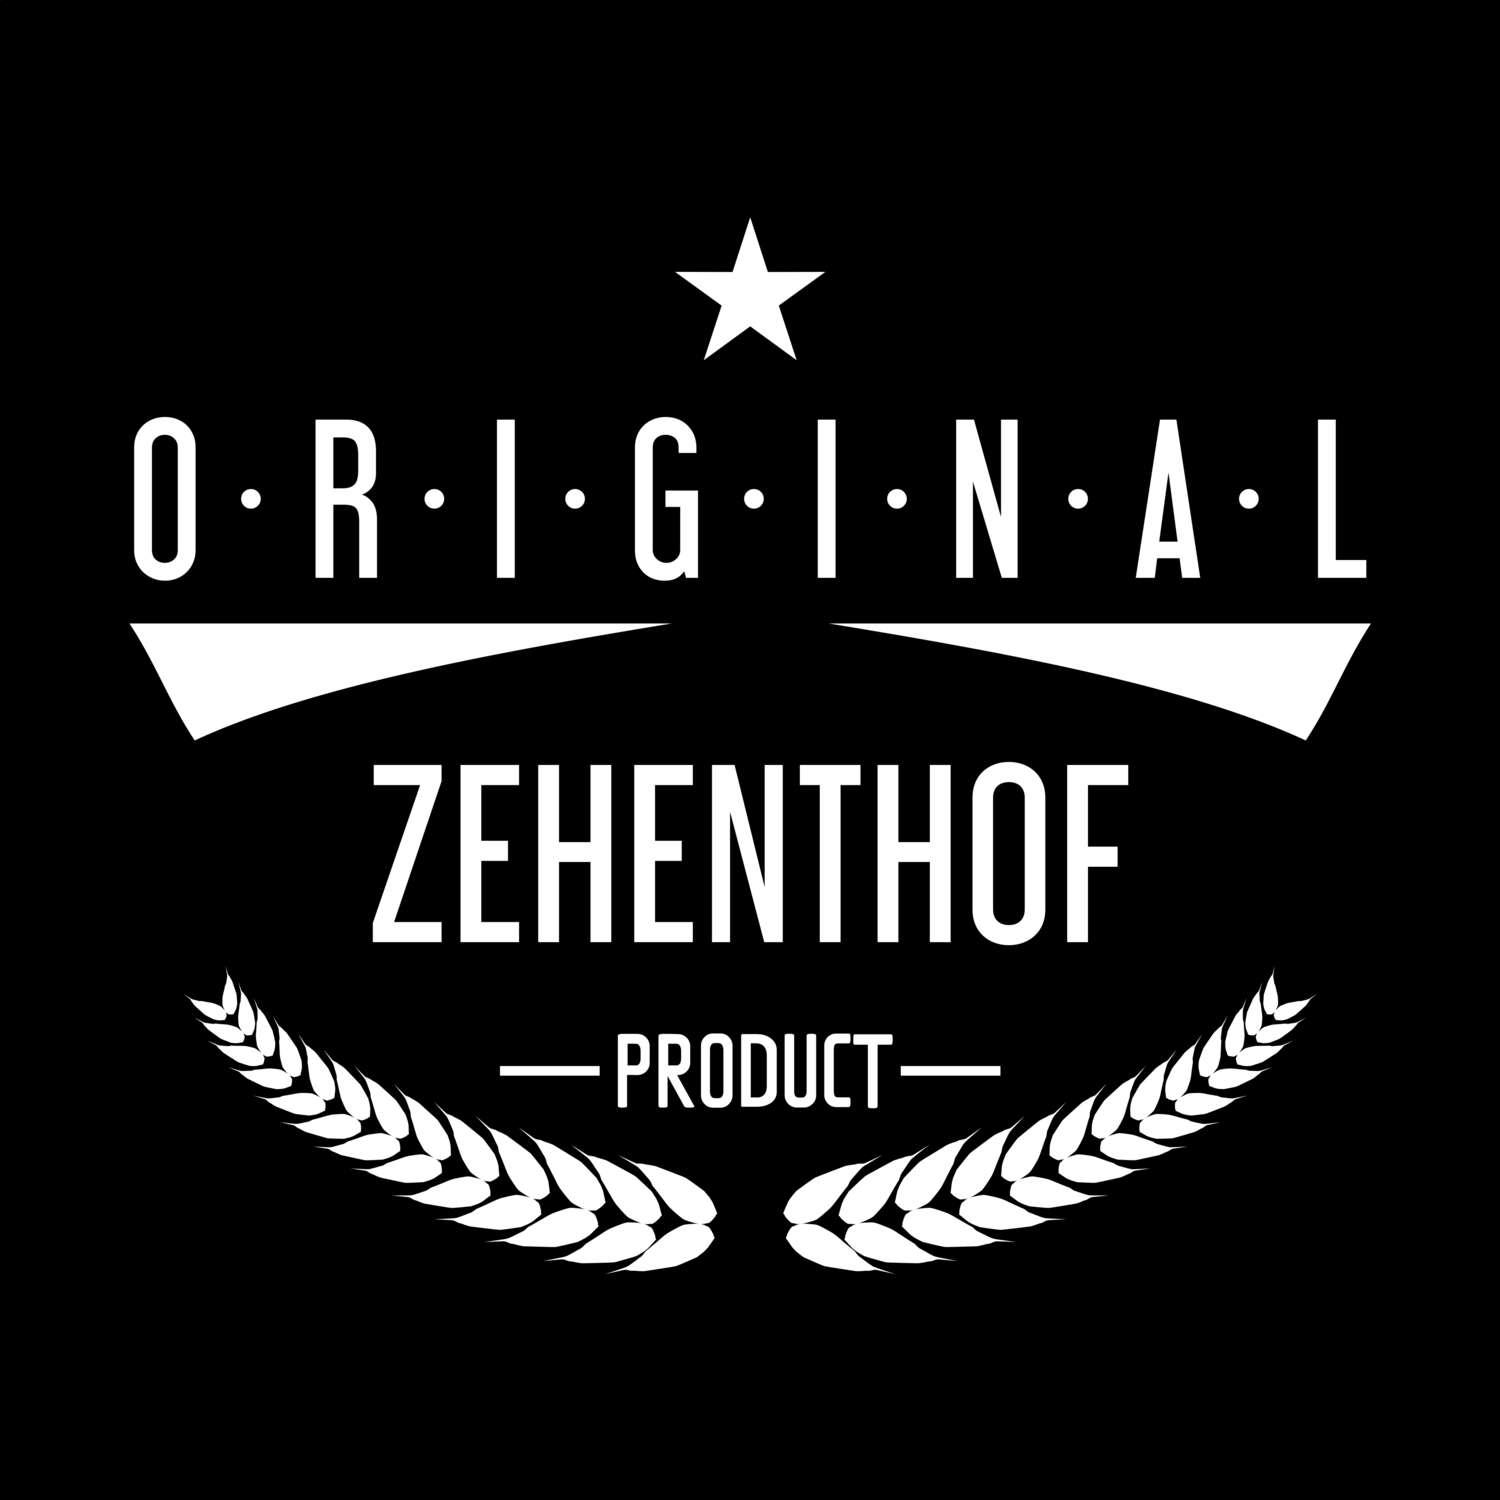 Zehenthof T-Shirt »Original Product«